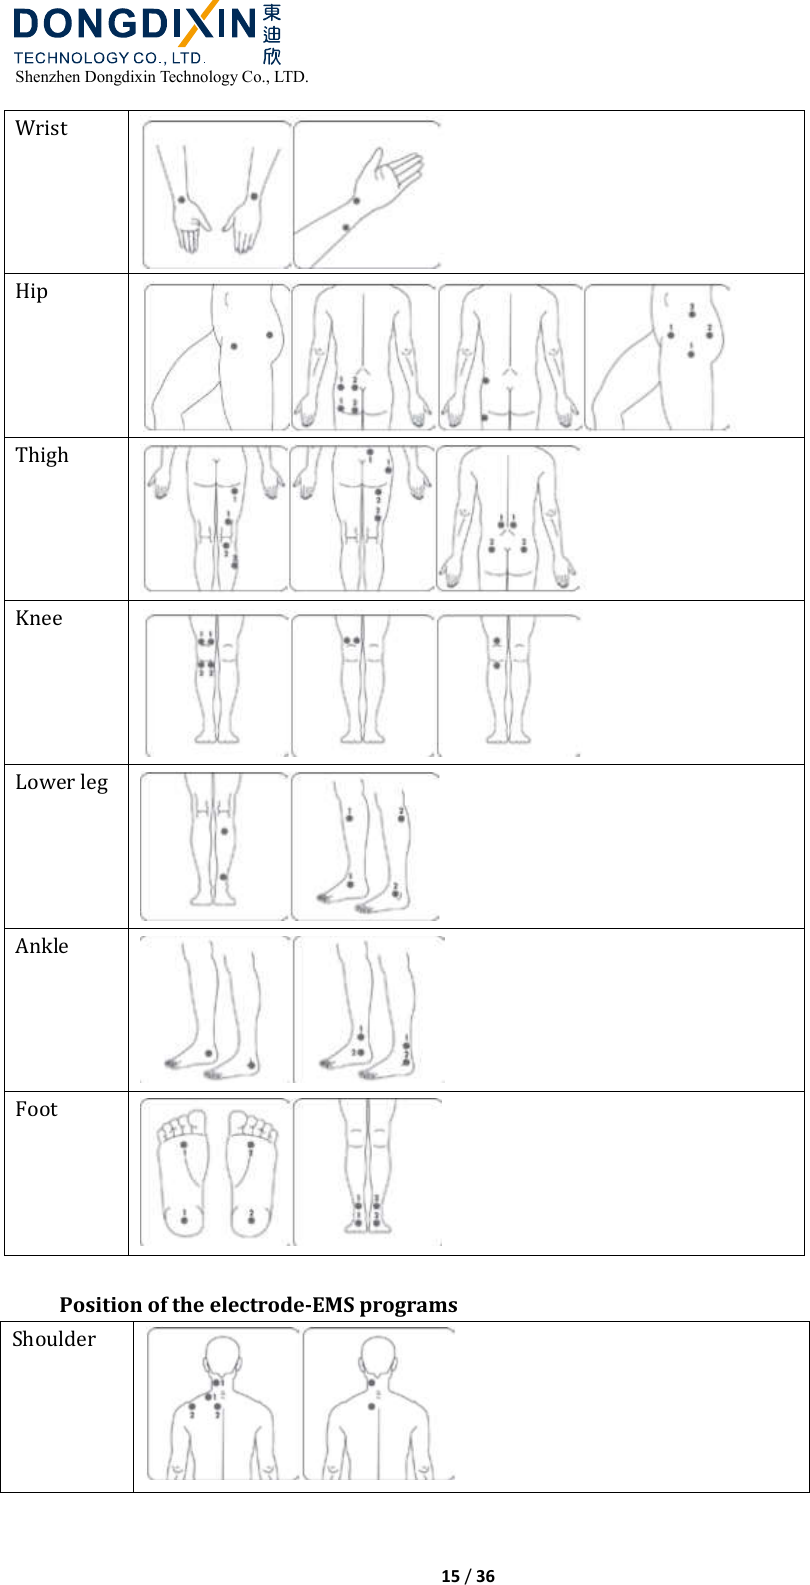  Shenzhen Dongdixin Technology Co., LTD.  15 / 36  Wrist  Hip  Thigh  Knee  Lower leg  Ankle  Foot   Position of the electrode-EMS programs Shoulder  